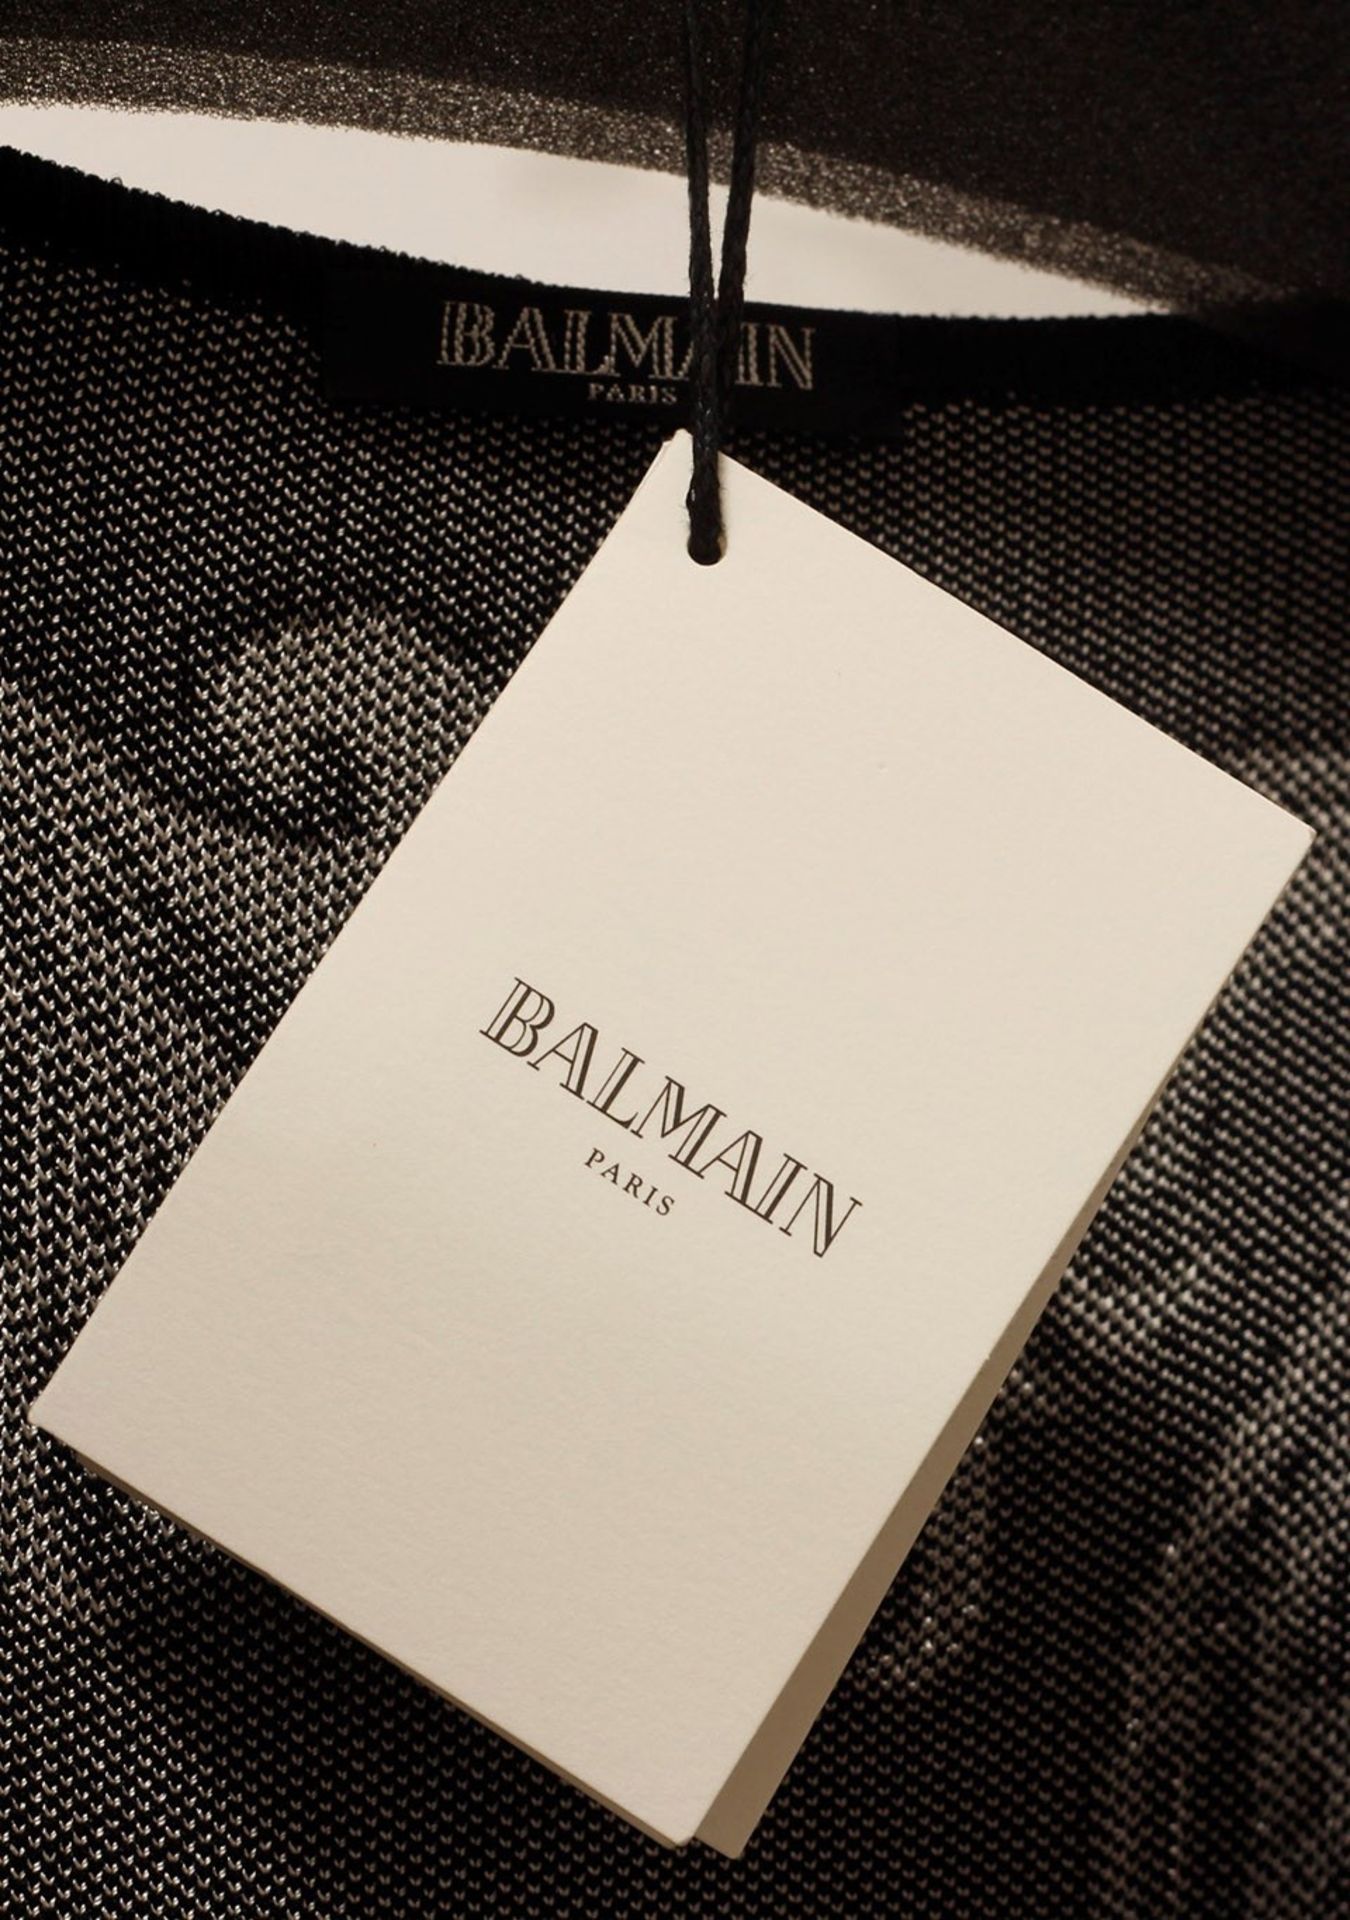 1 x Balmain Black White Jacket - Size: 18 - Material: 88% viscose, 10% Polyester, 2% Nylon - From - Image 2 of 13